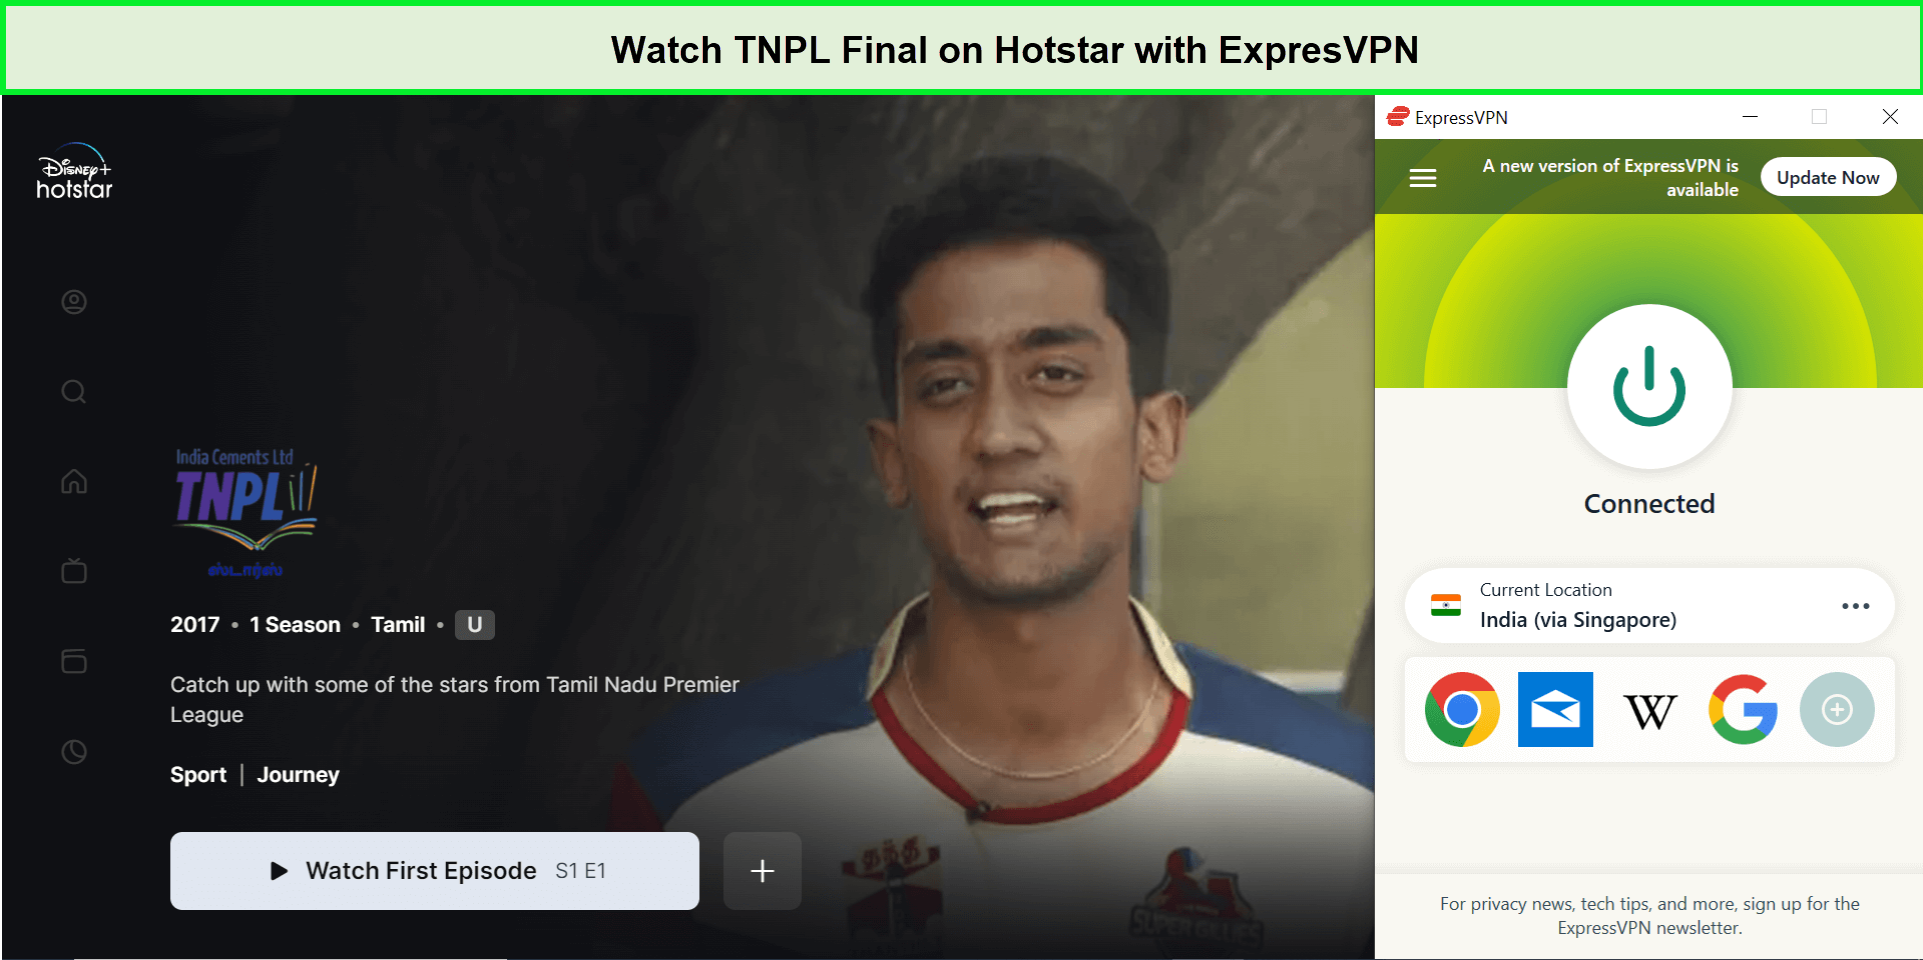 Watch-TNPL-Final-in-Singapore-on-Hotstar-with-ExpresVPN